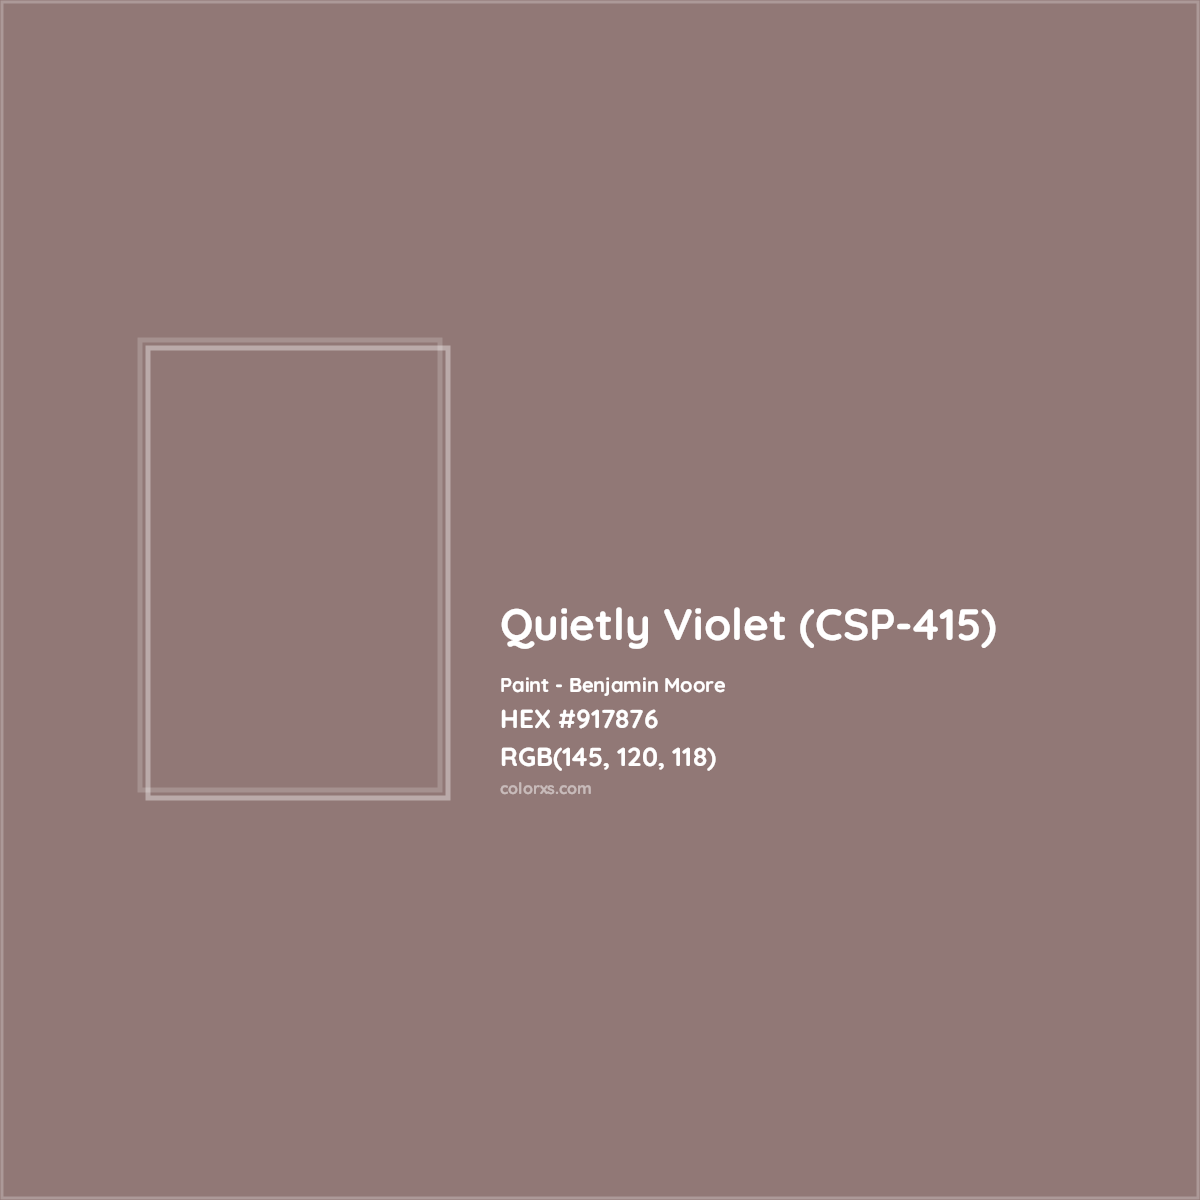 HEX #917876 Quietly Violet (CSP-415) Paint Benjamin Moore - Color Code